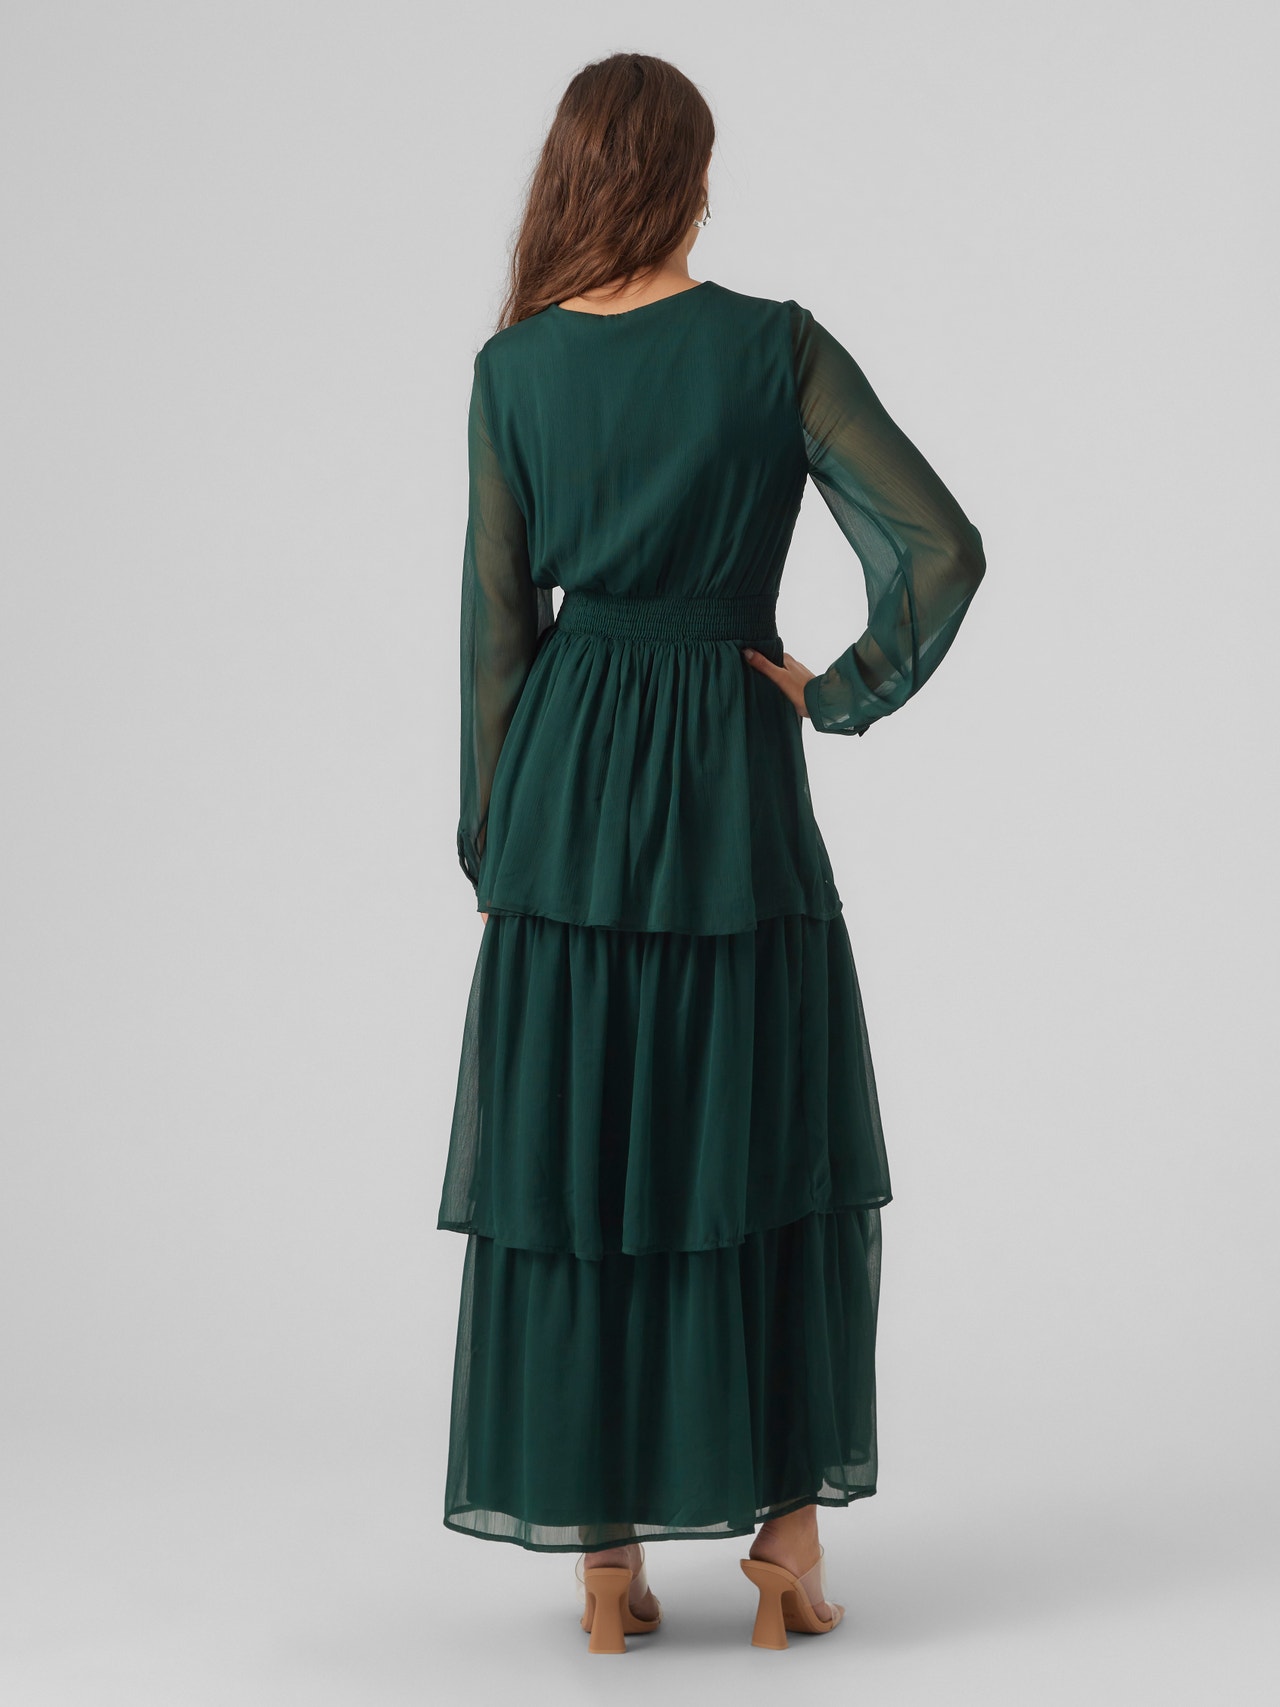 Vero Moda VMELLA Long dress -Pine Grove - 10298556